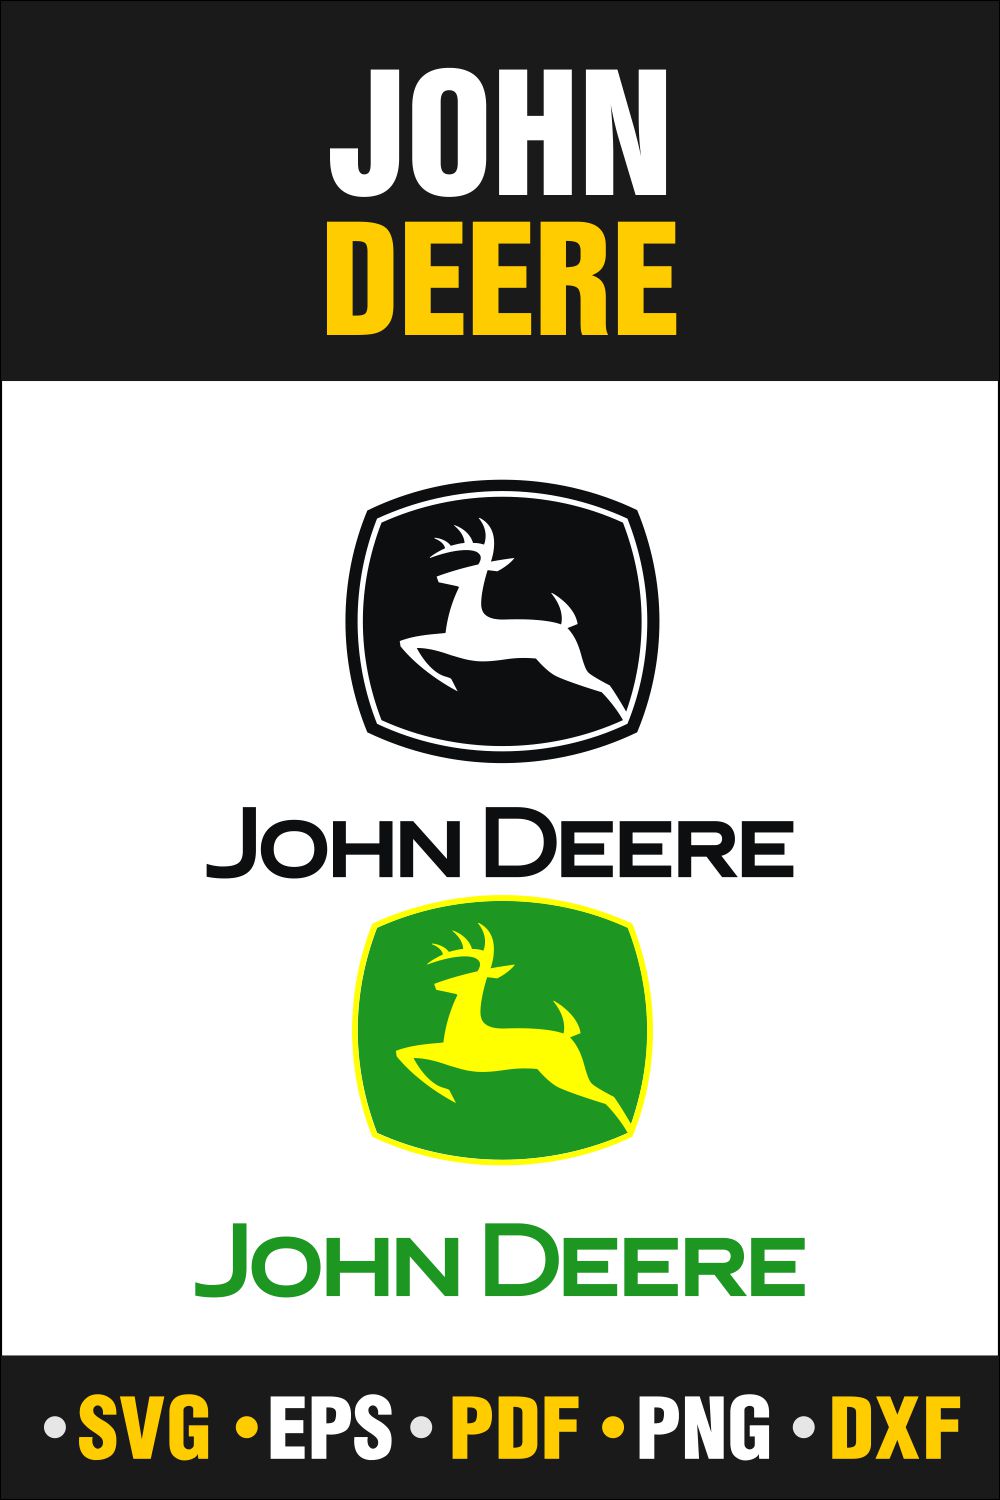 John deere.